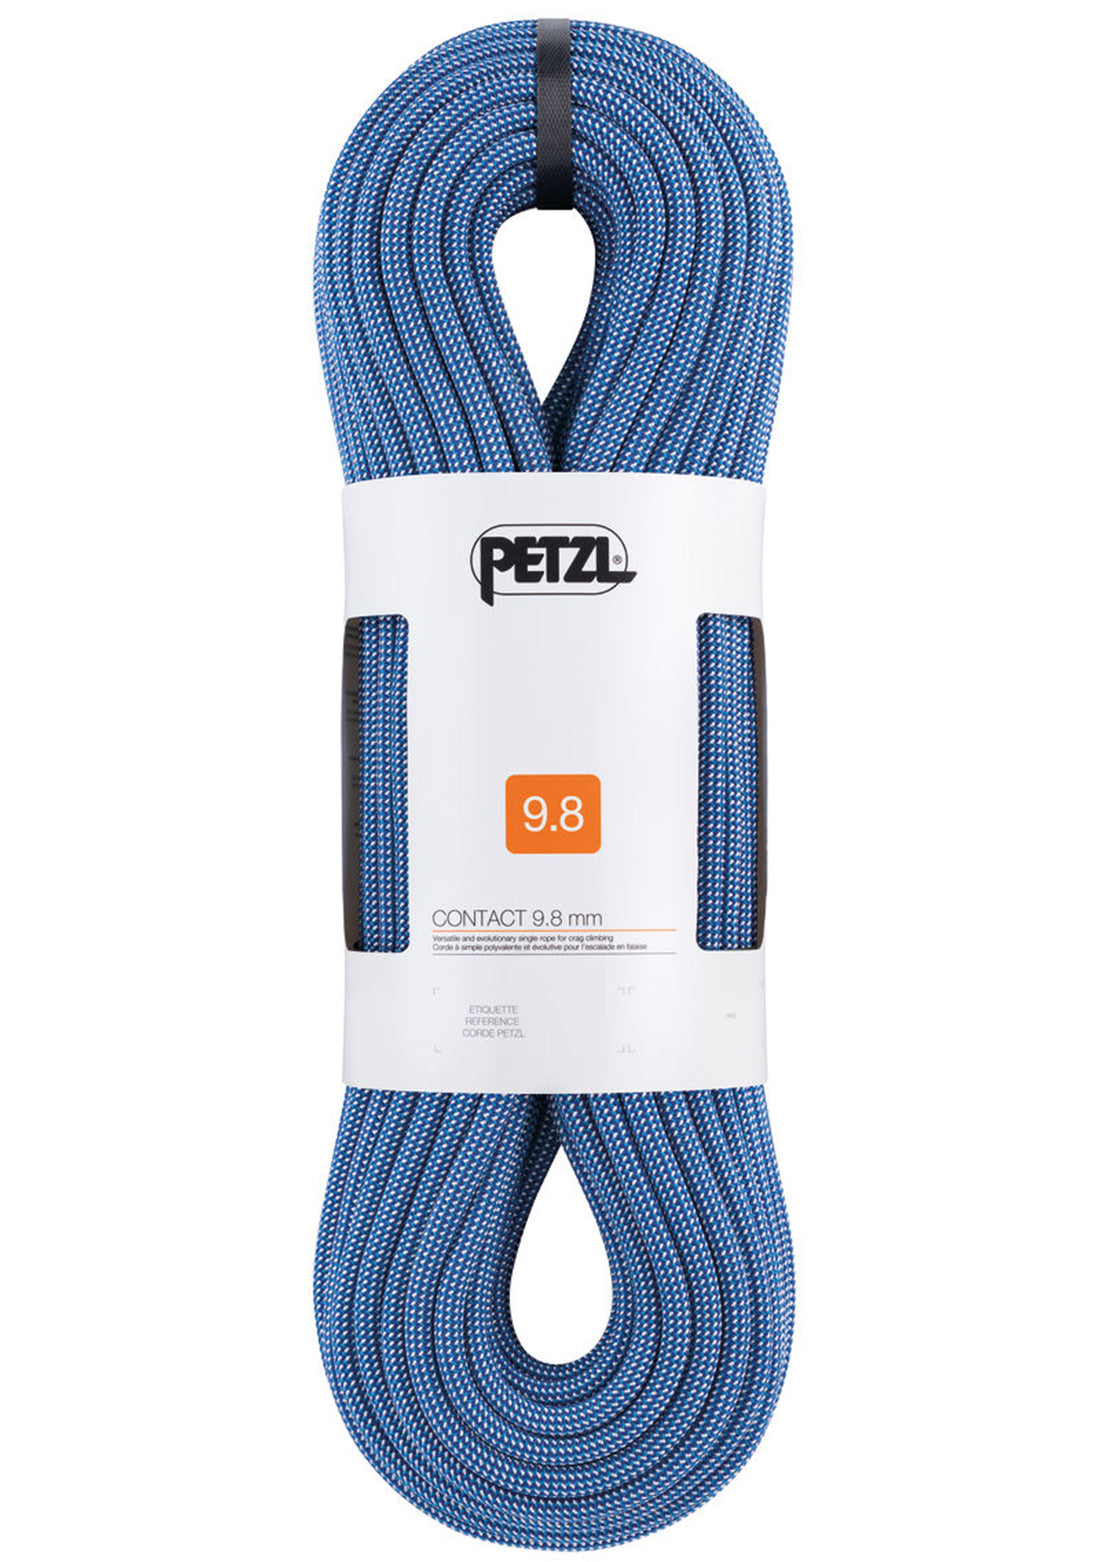 Petzl Contact 9.8mm Climbing Rope - 70m - PRFO Sports